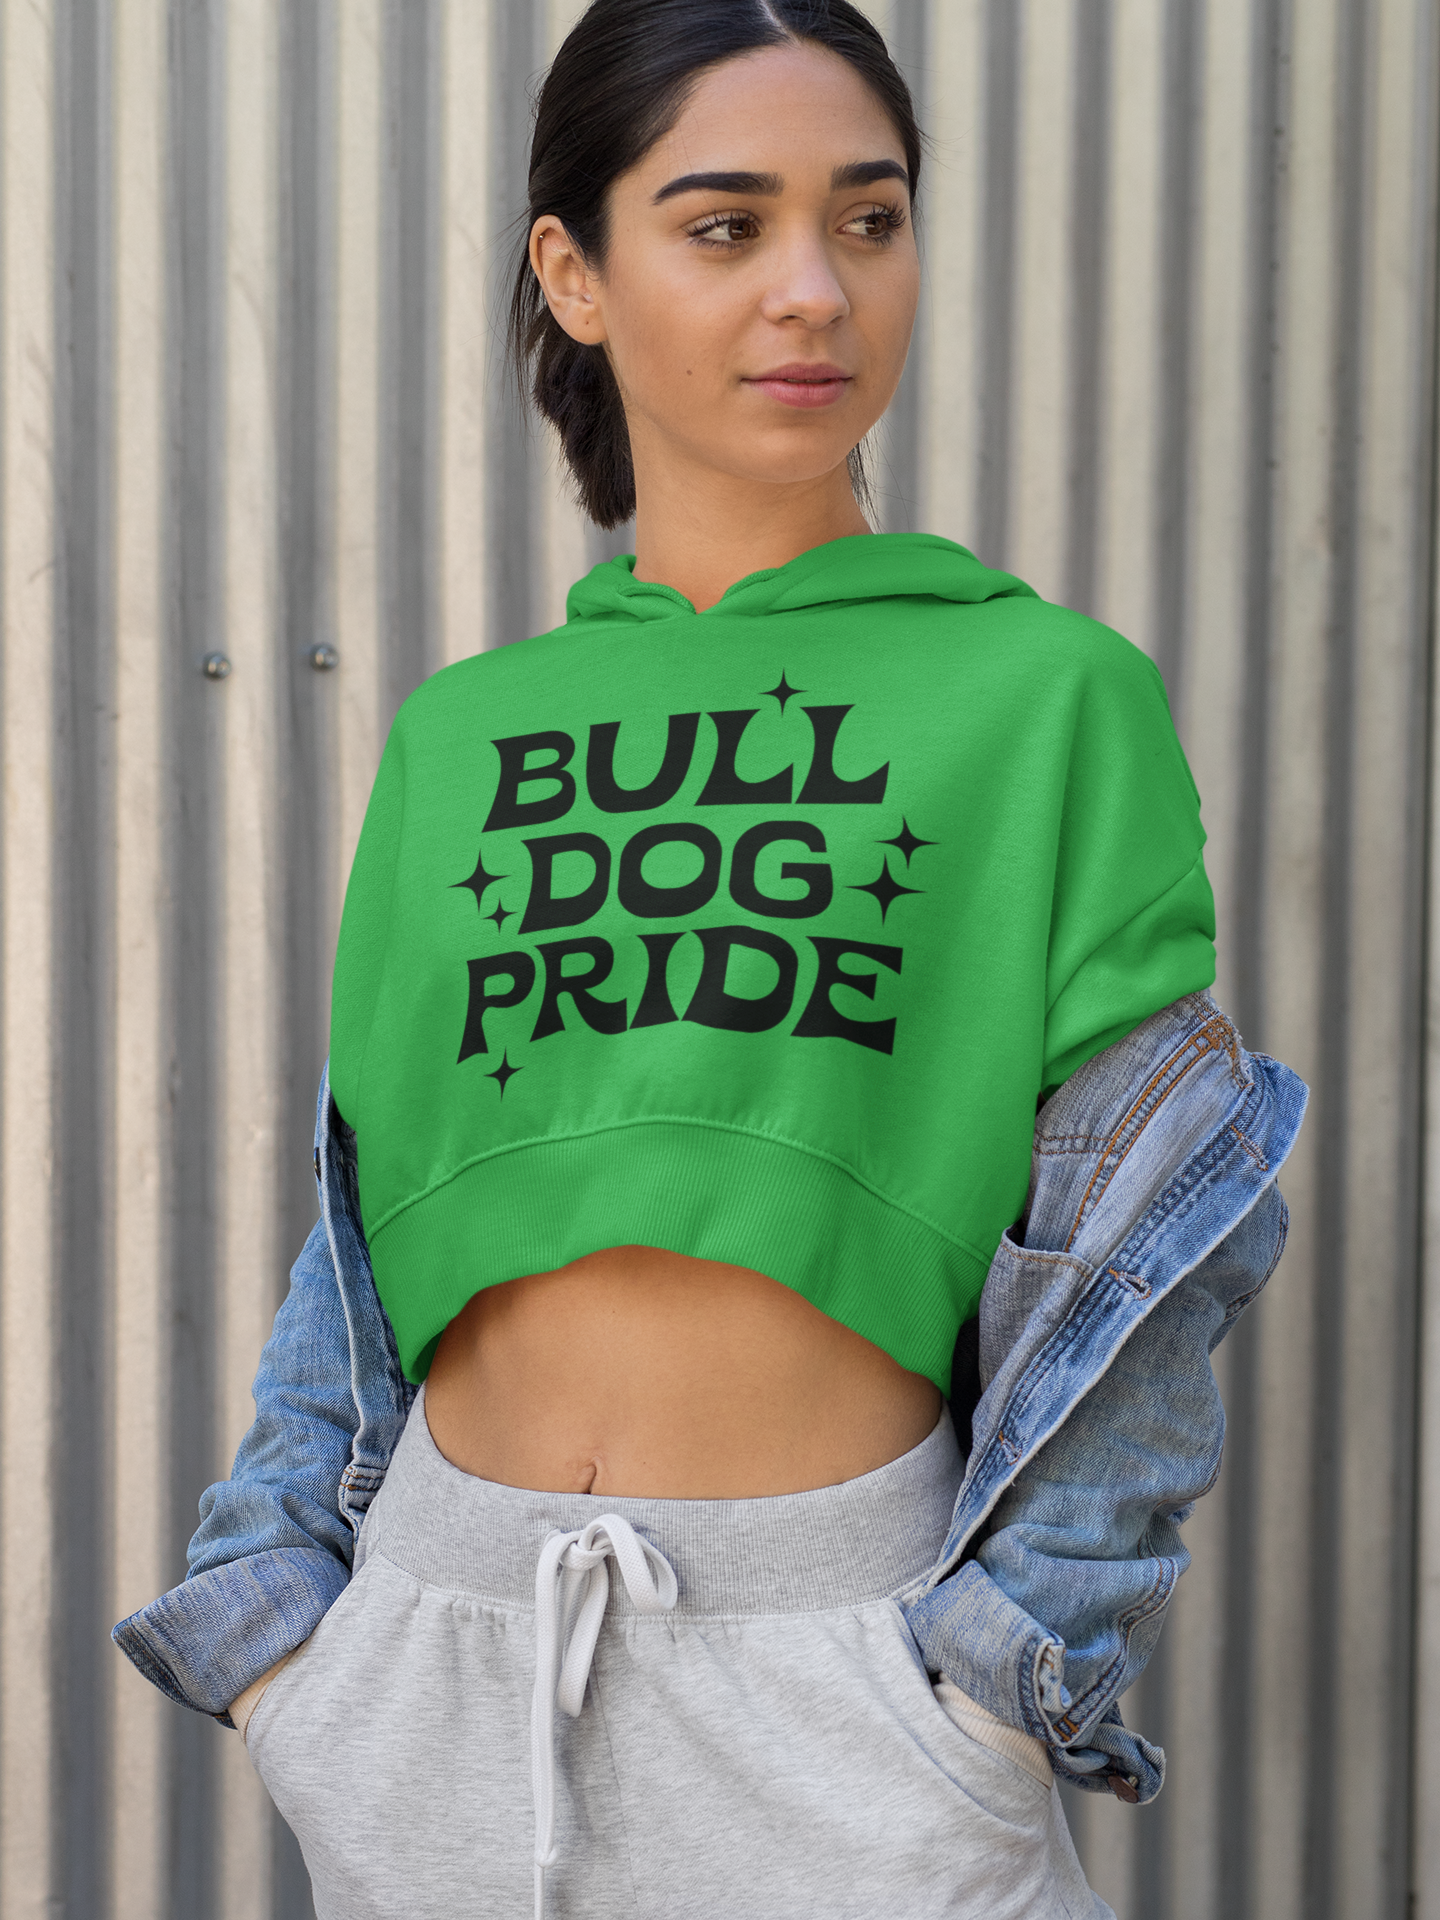 Bulldog Pride Mascot SVG Digital Download Design File